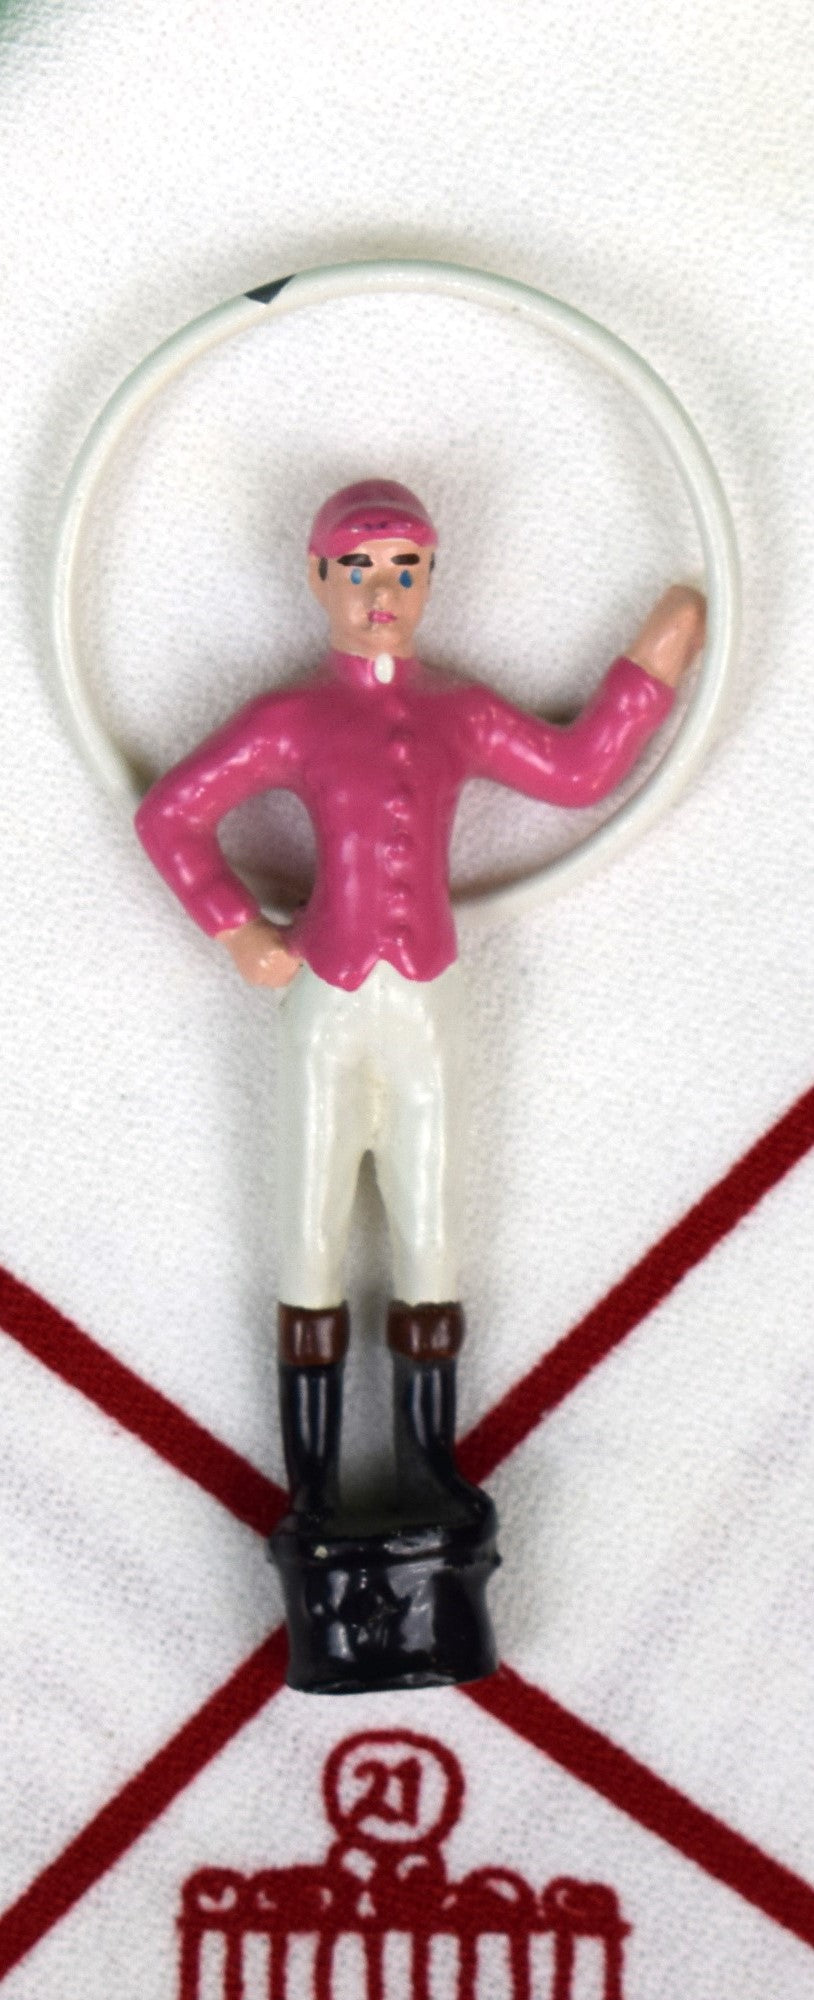 The "21" Club Pink Jockey Napkin Holder (SOLD)